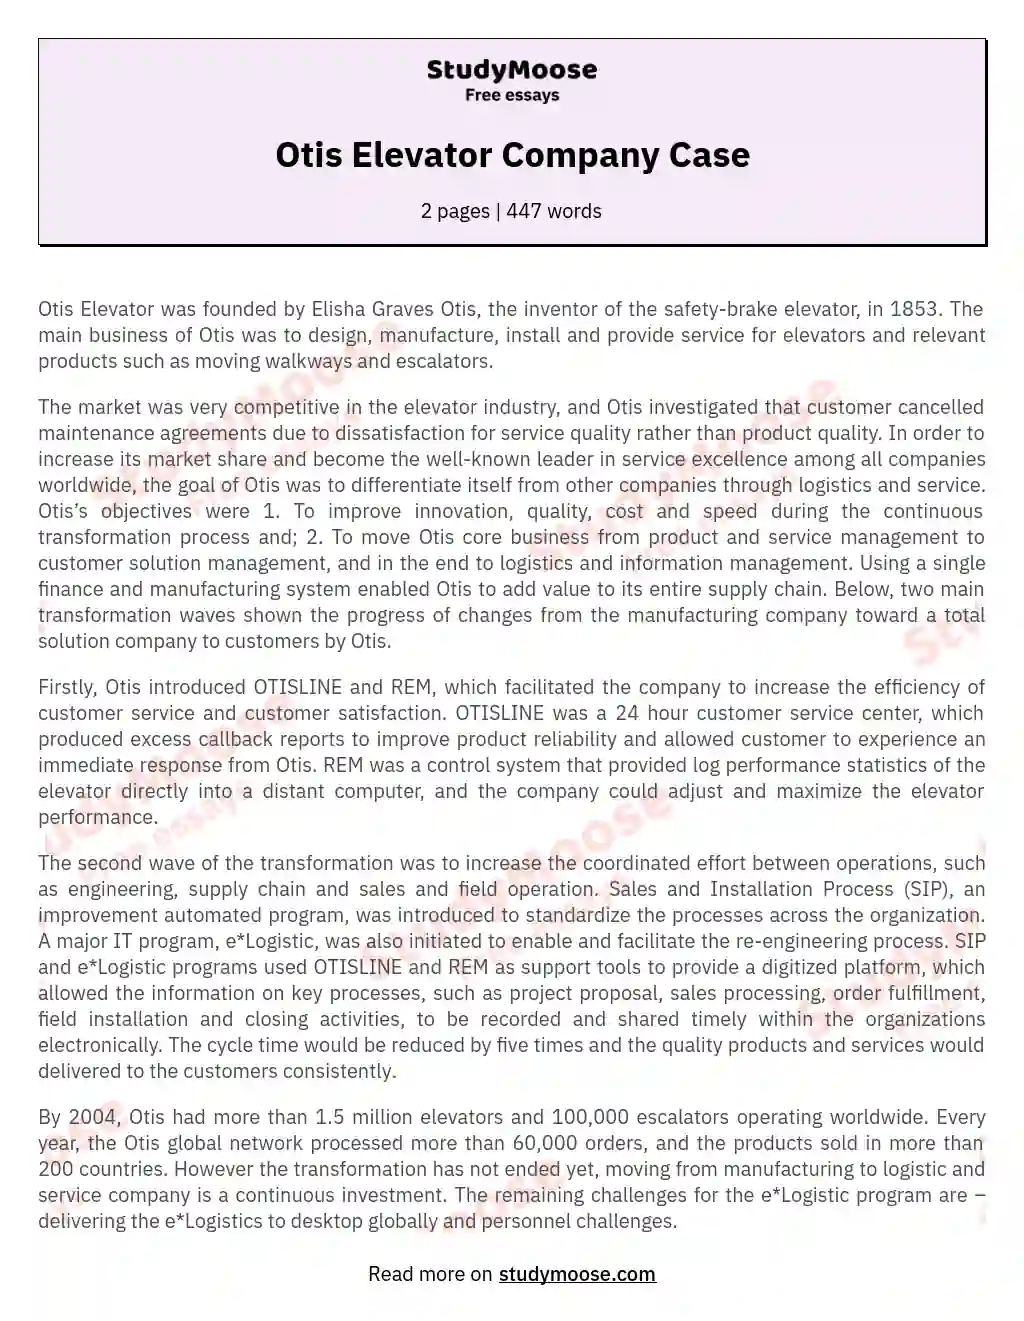 Otis Elevator Company Case essay